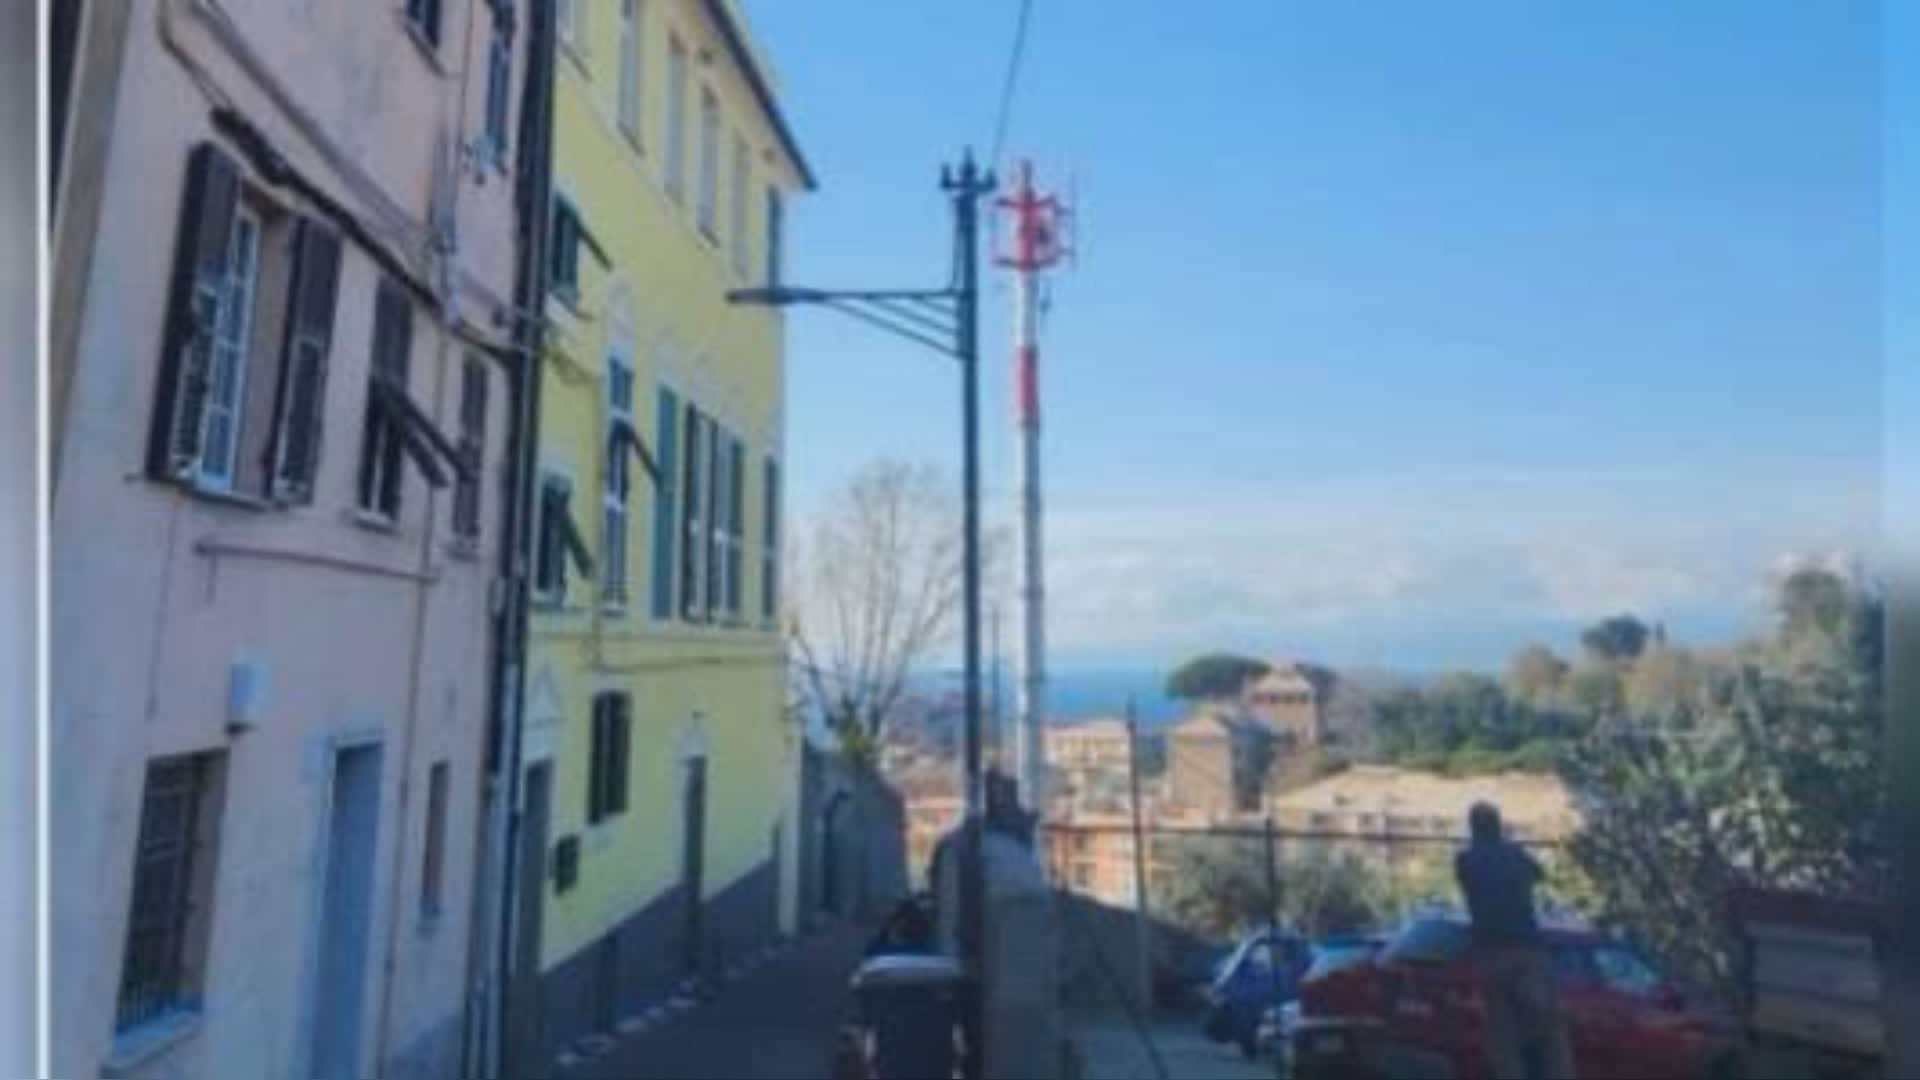 Liguria, difensore civico a Comuni: "Regolamentate antenne 5G"